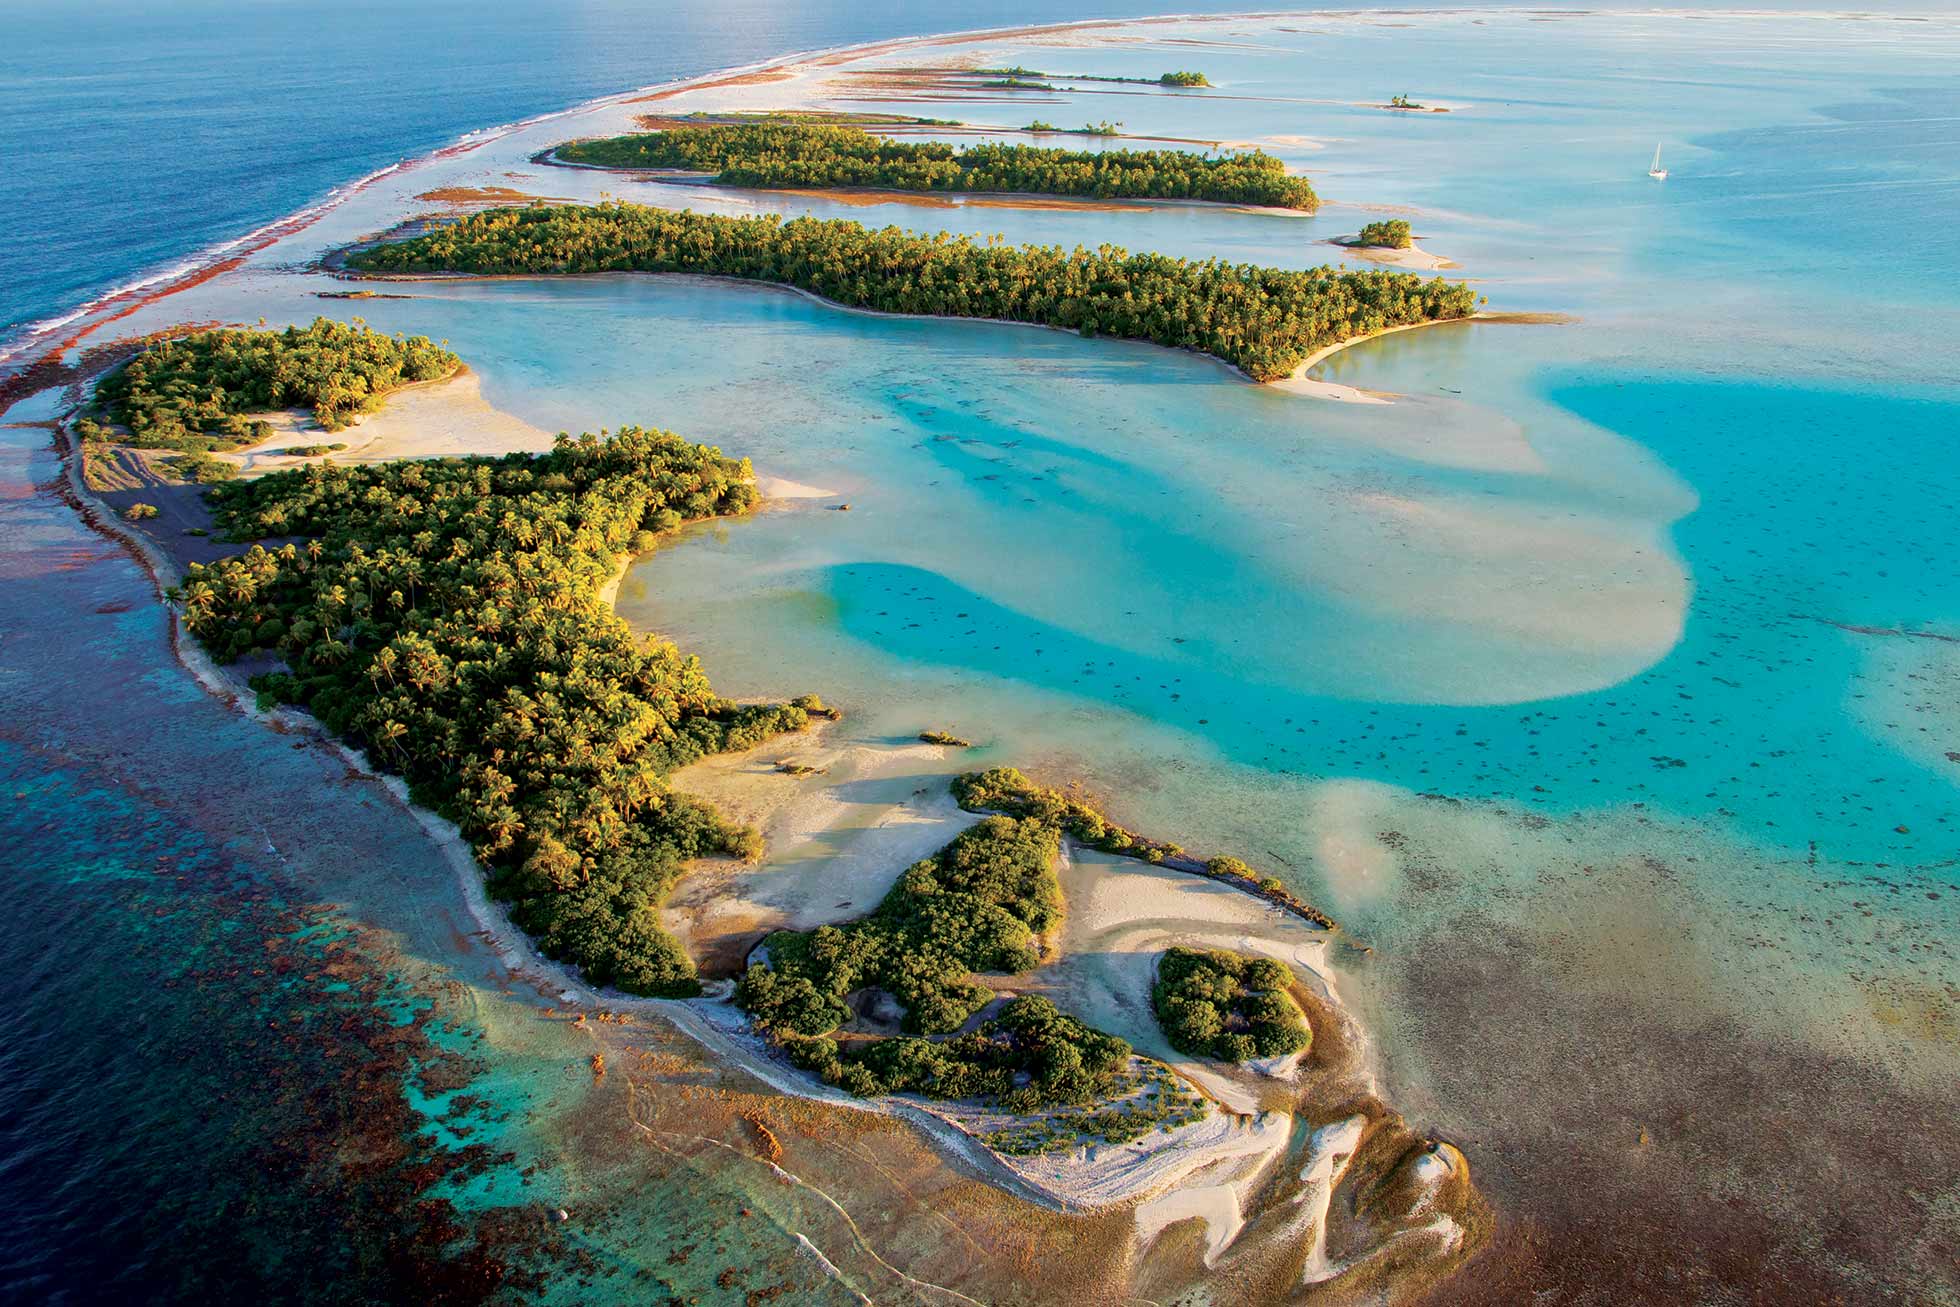 Fakarava Atoll in French Polynesia